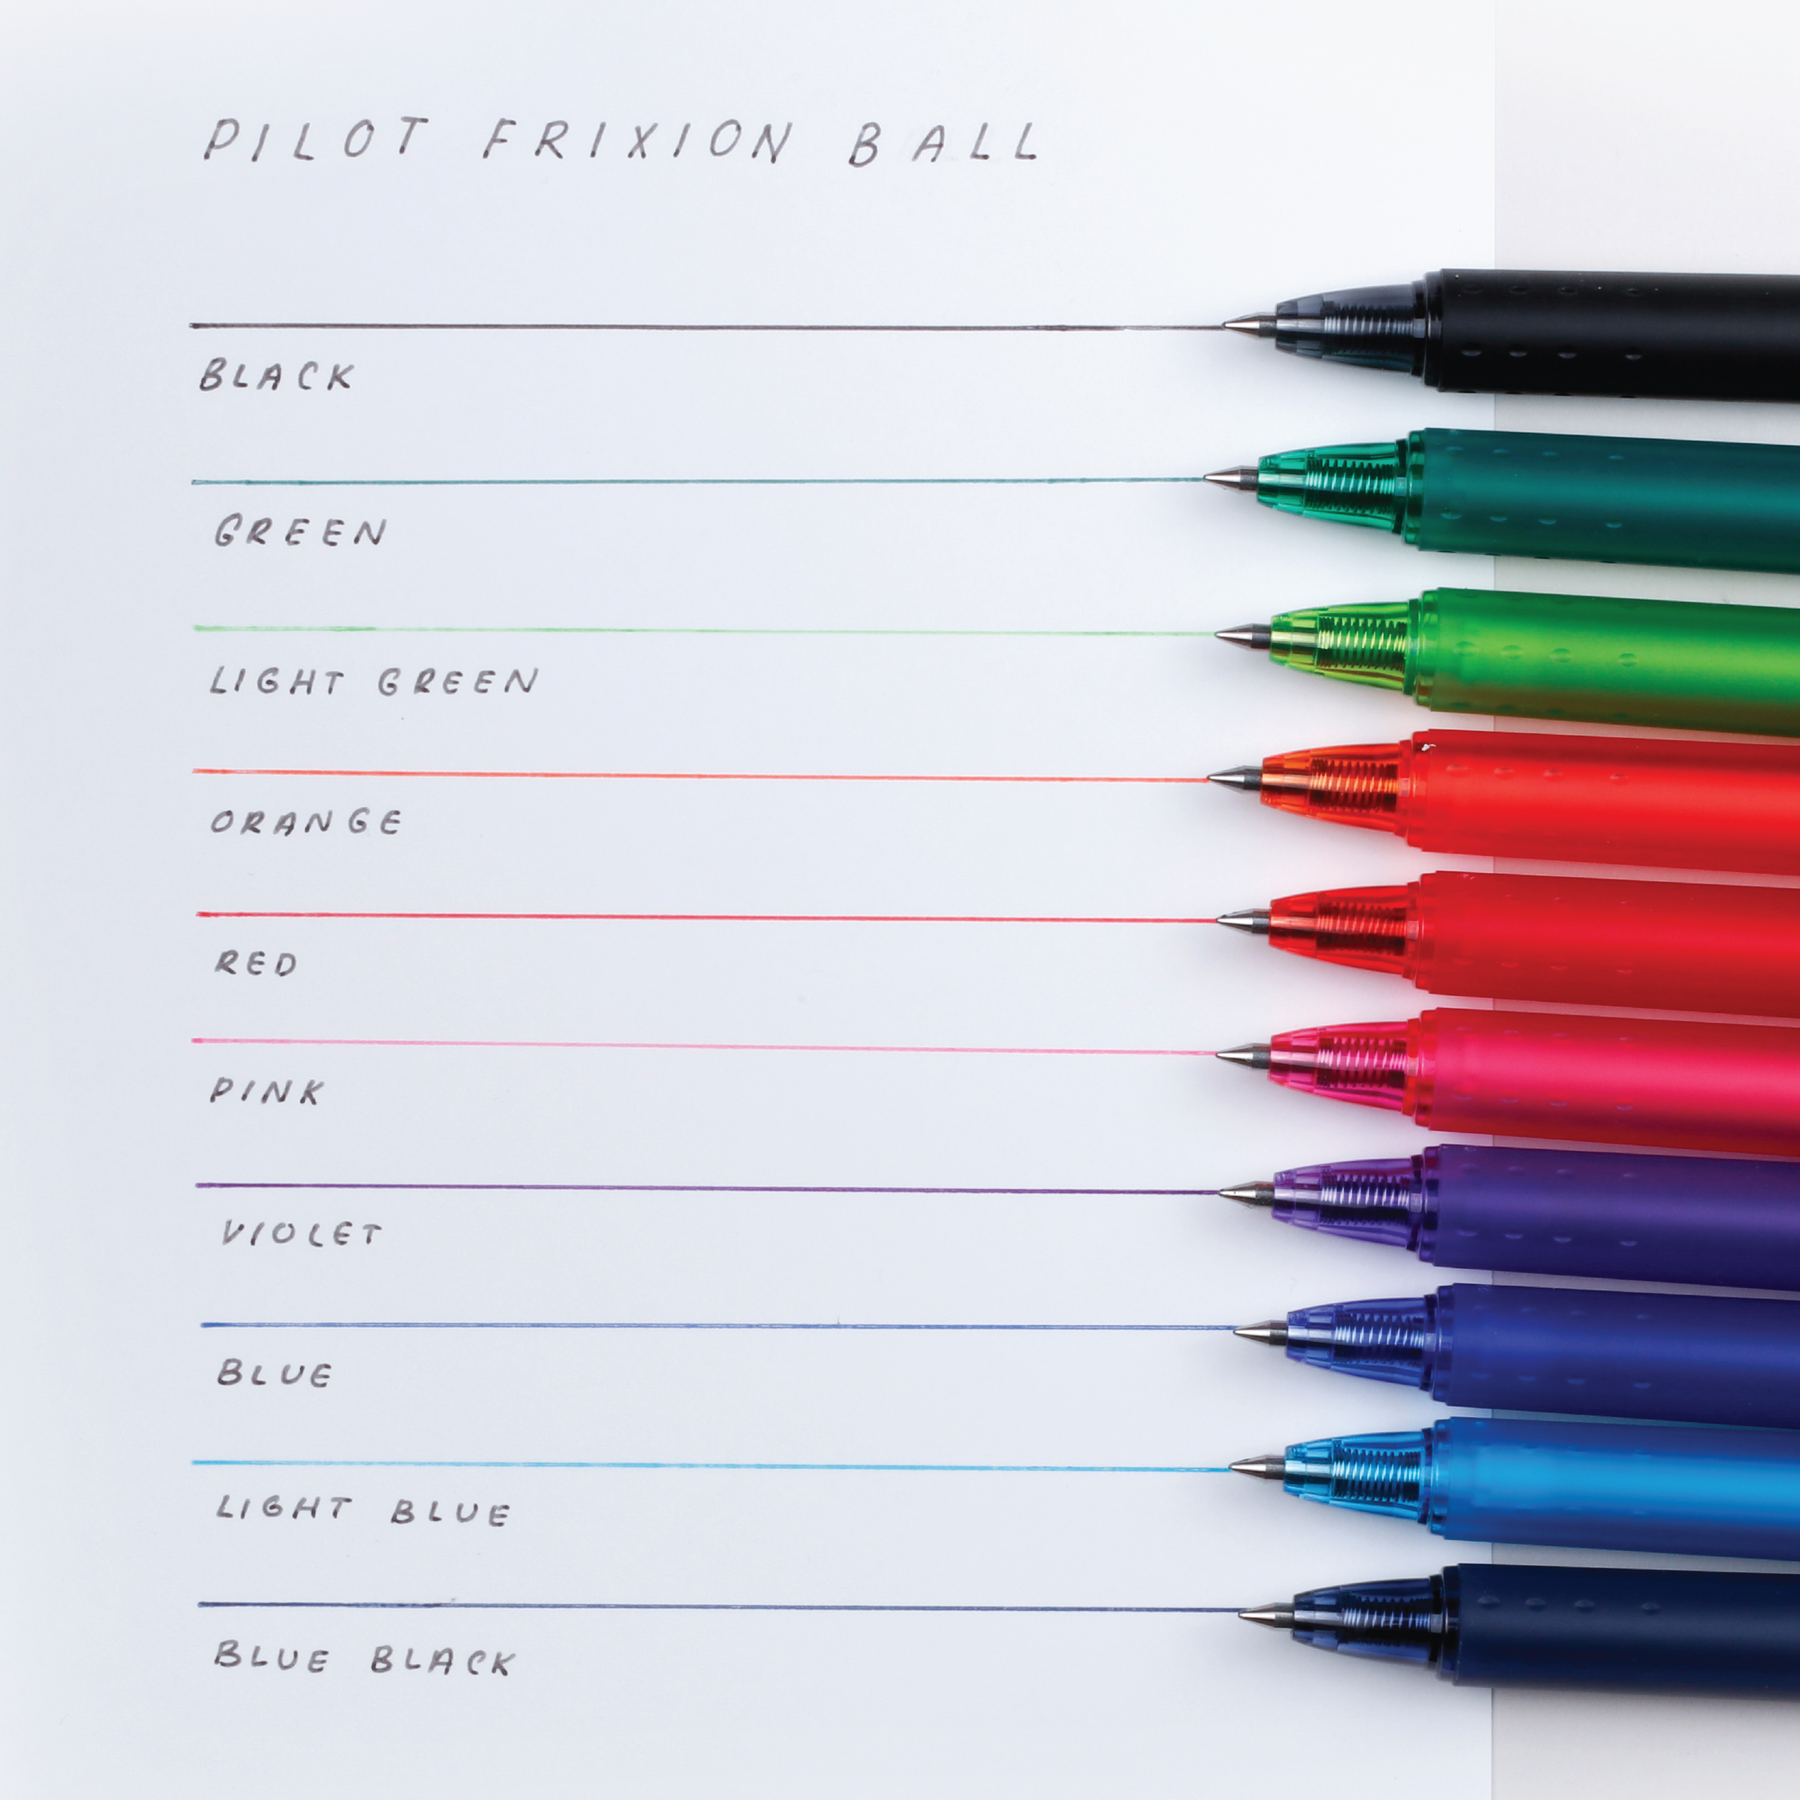 Pilot FriXion Ball Refill - 0.5 mm - Blue Black